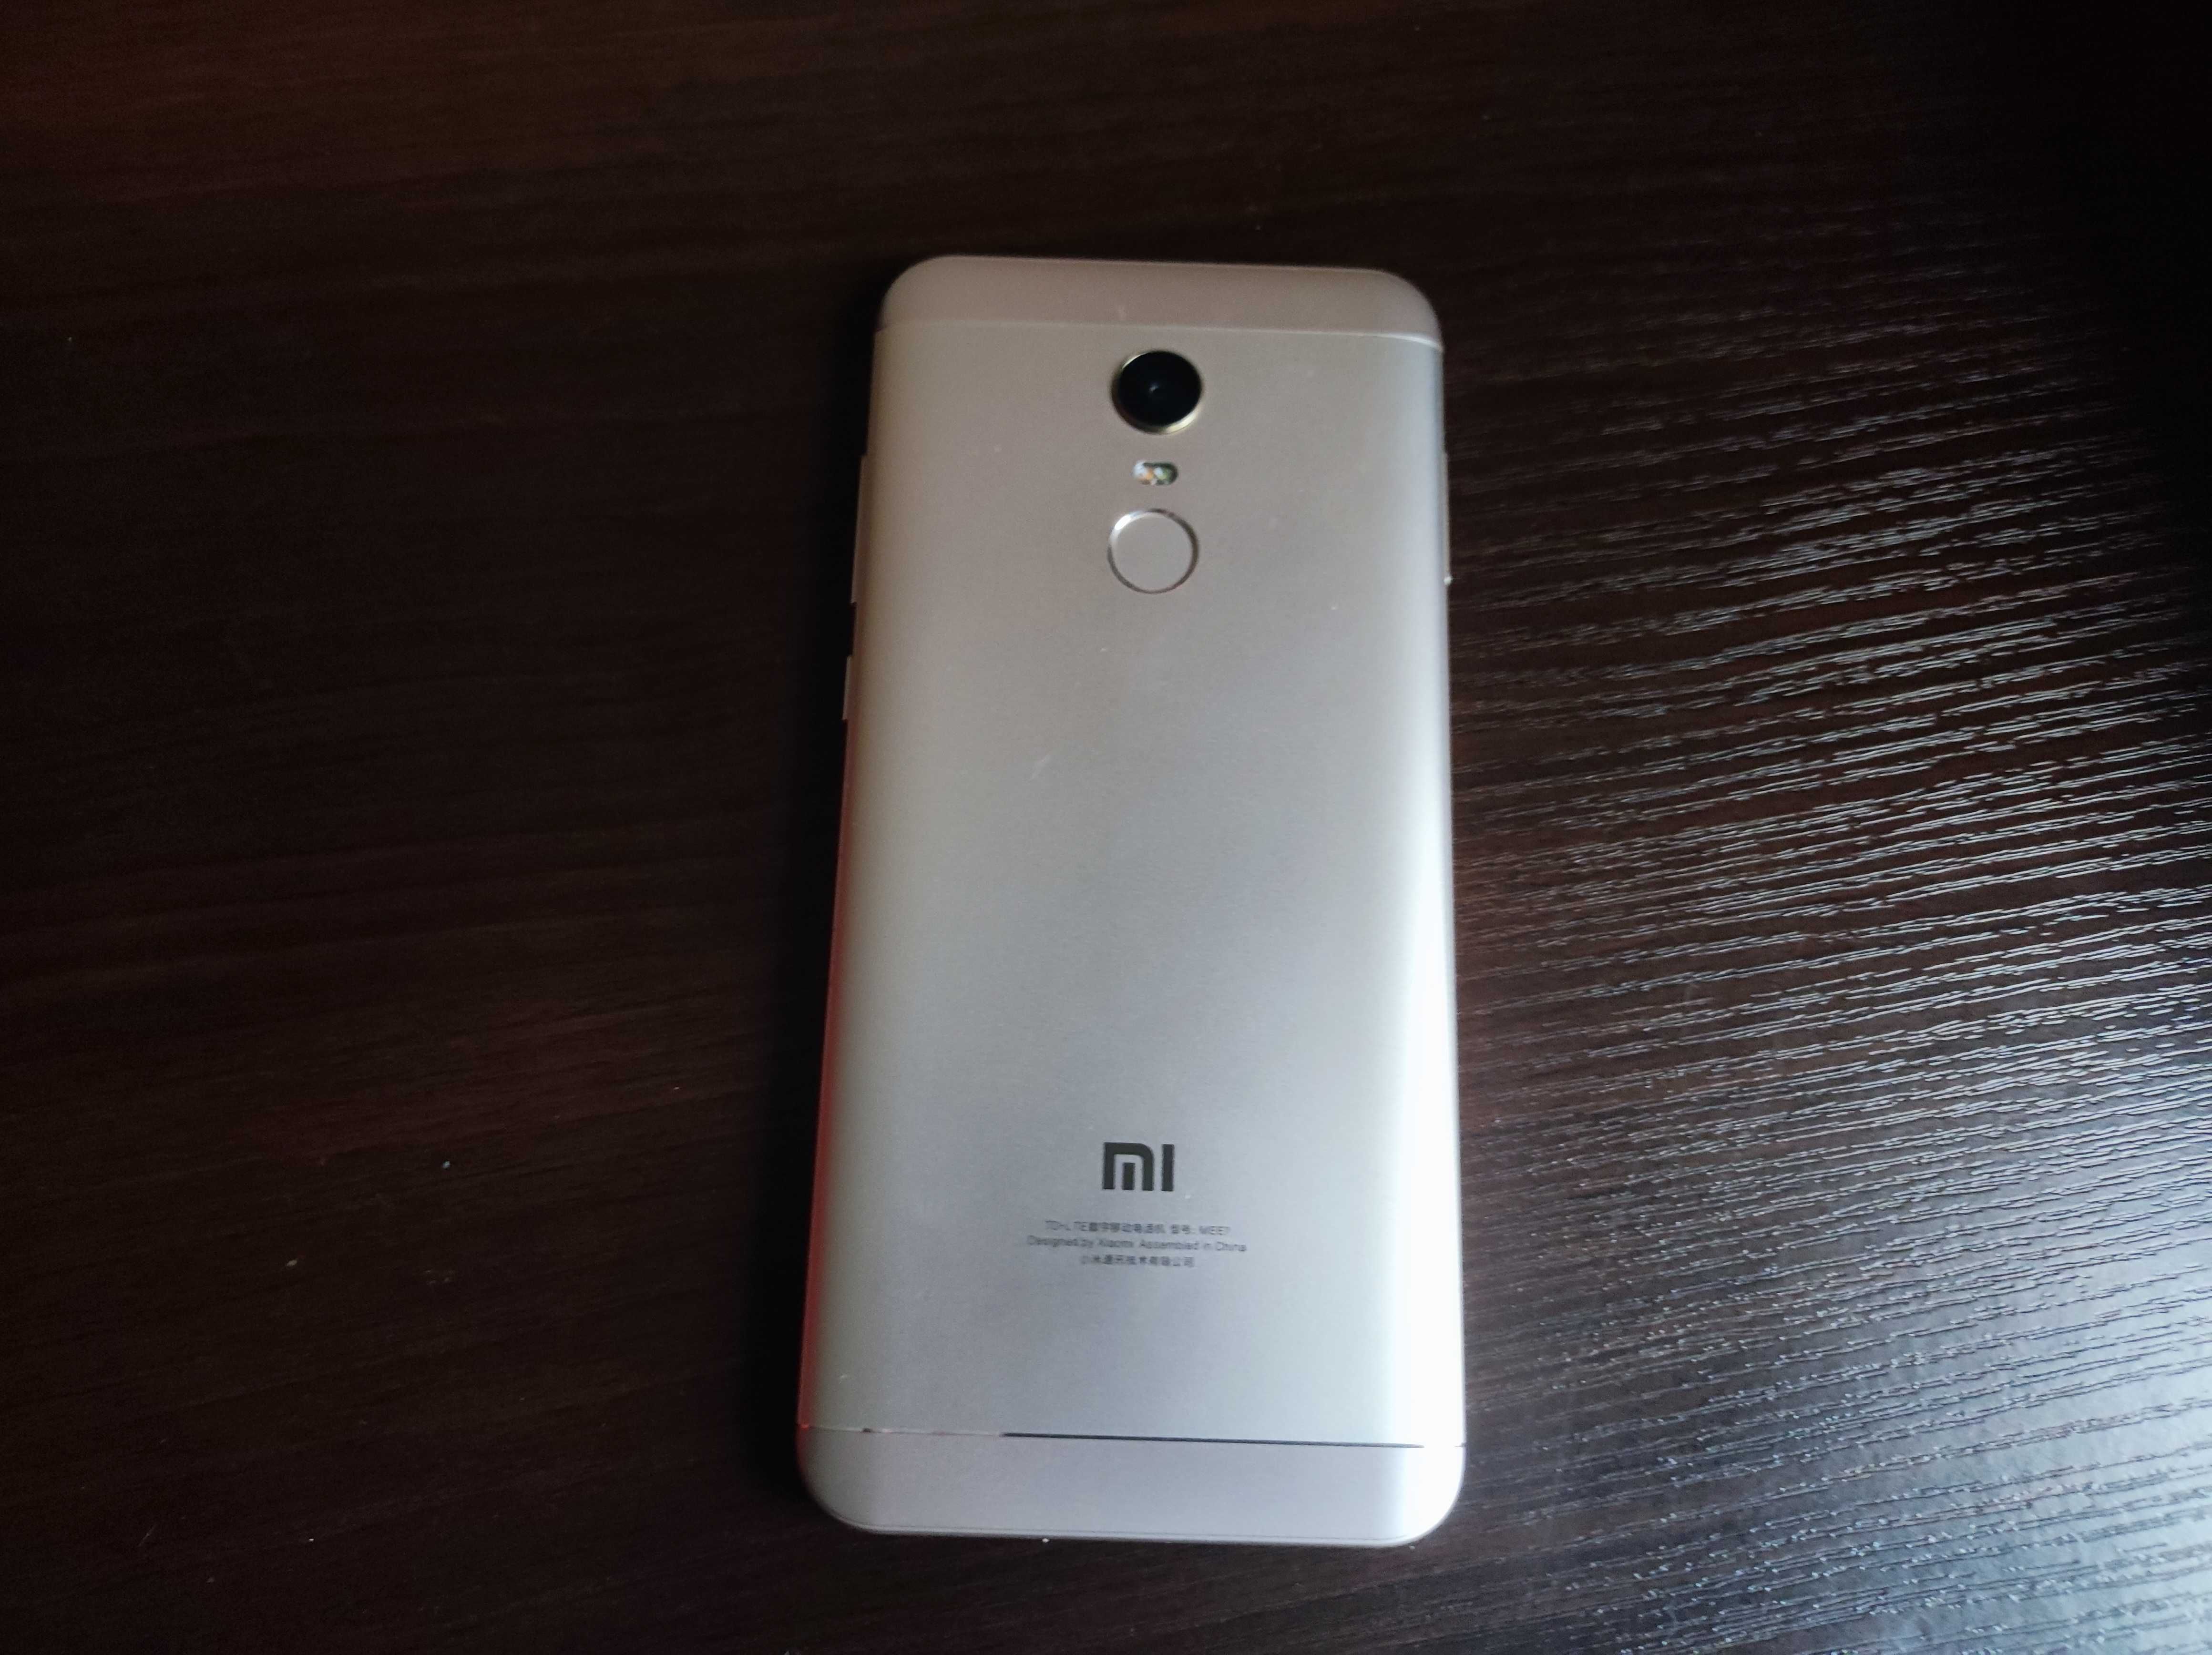 Телефон Xiaomi redmi 5 plus